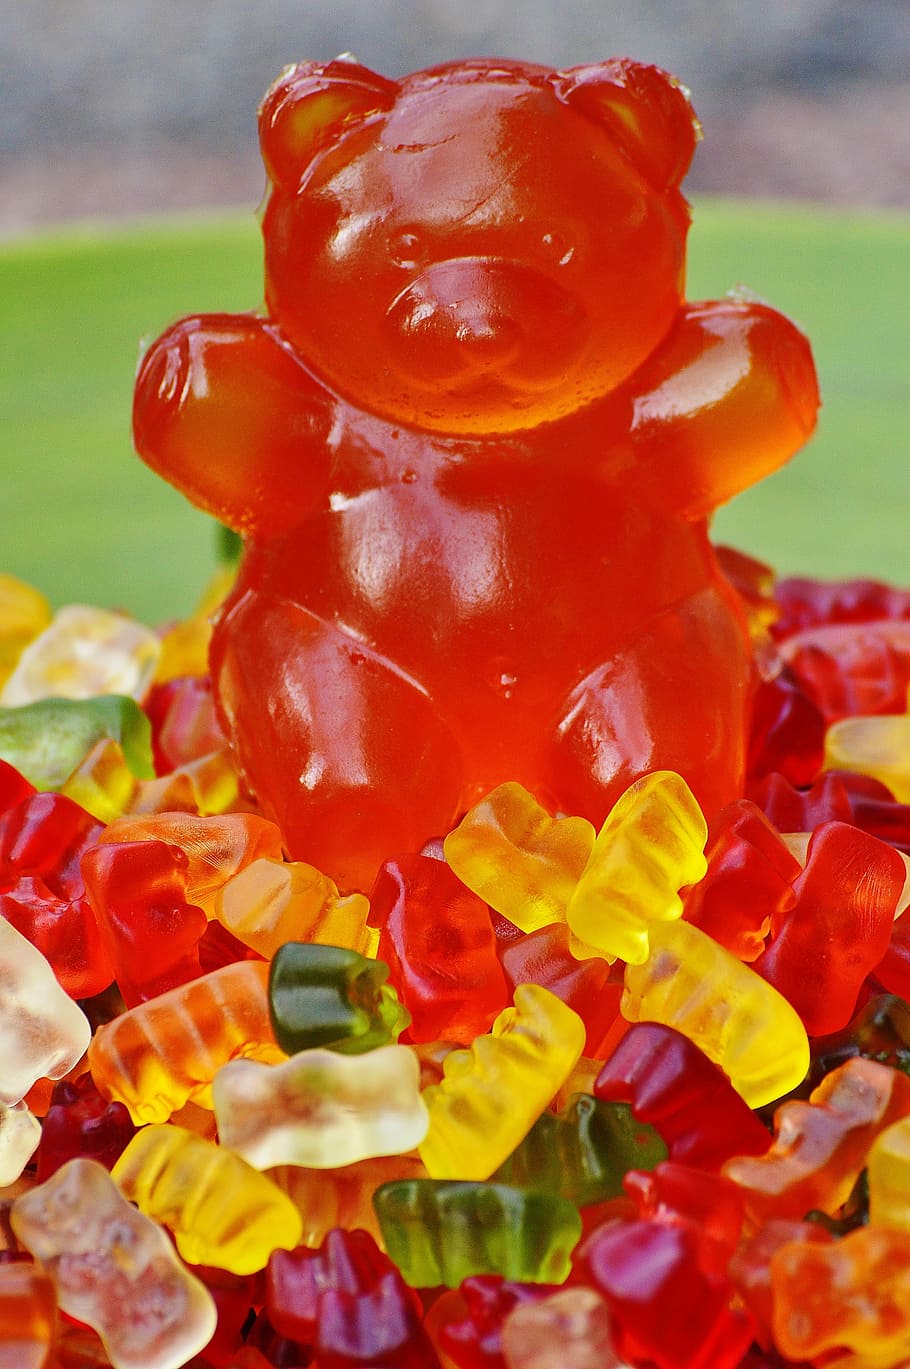 gummibärchen, giant rubber bear, gummibär, fruit gums, bear, delicious, color, colorful, sweetness, gummi bears